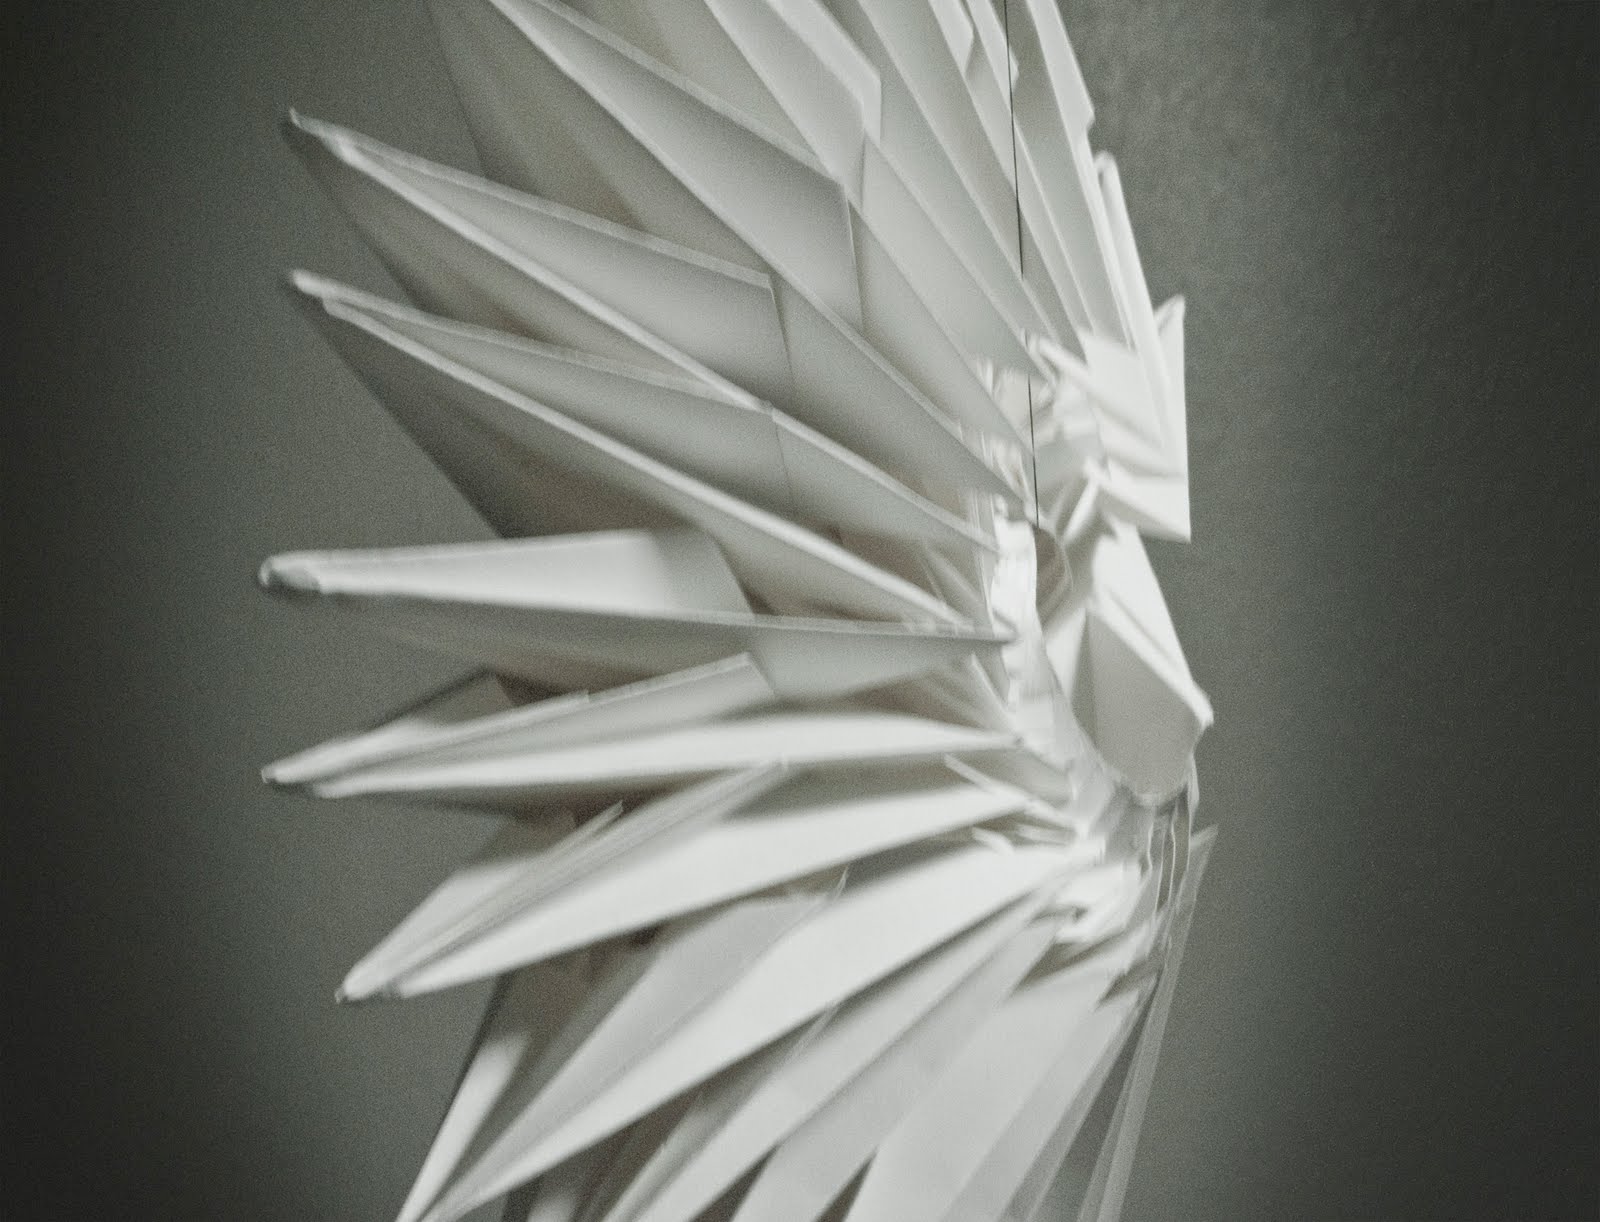 N.Schaffner: Final 3D paper model task 1